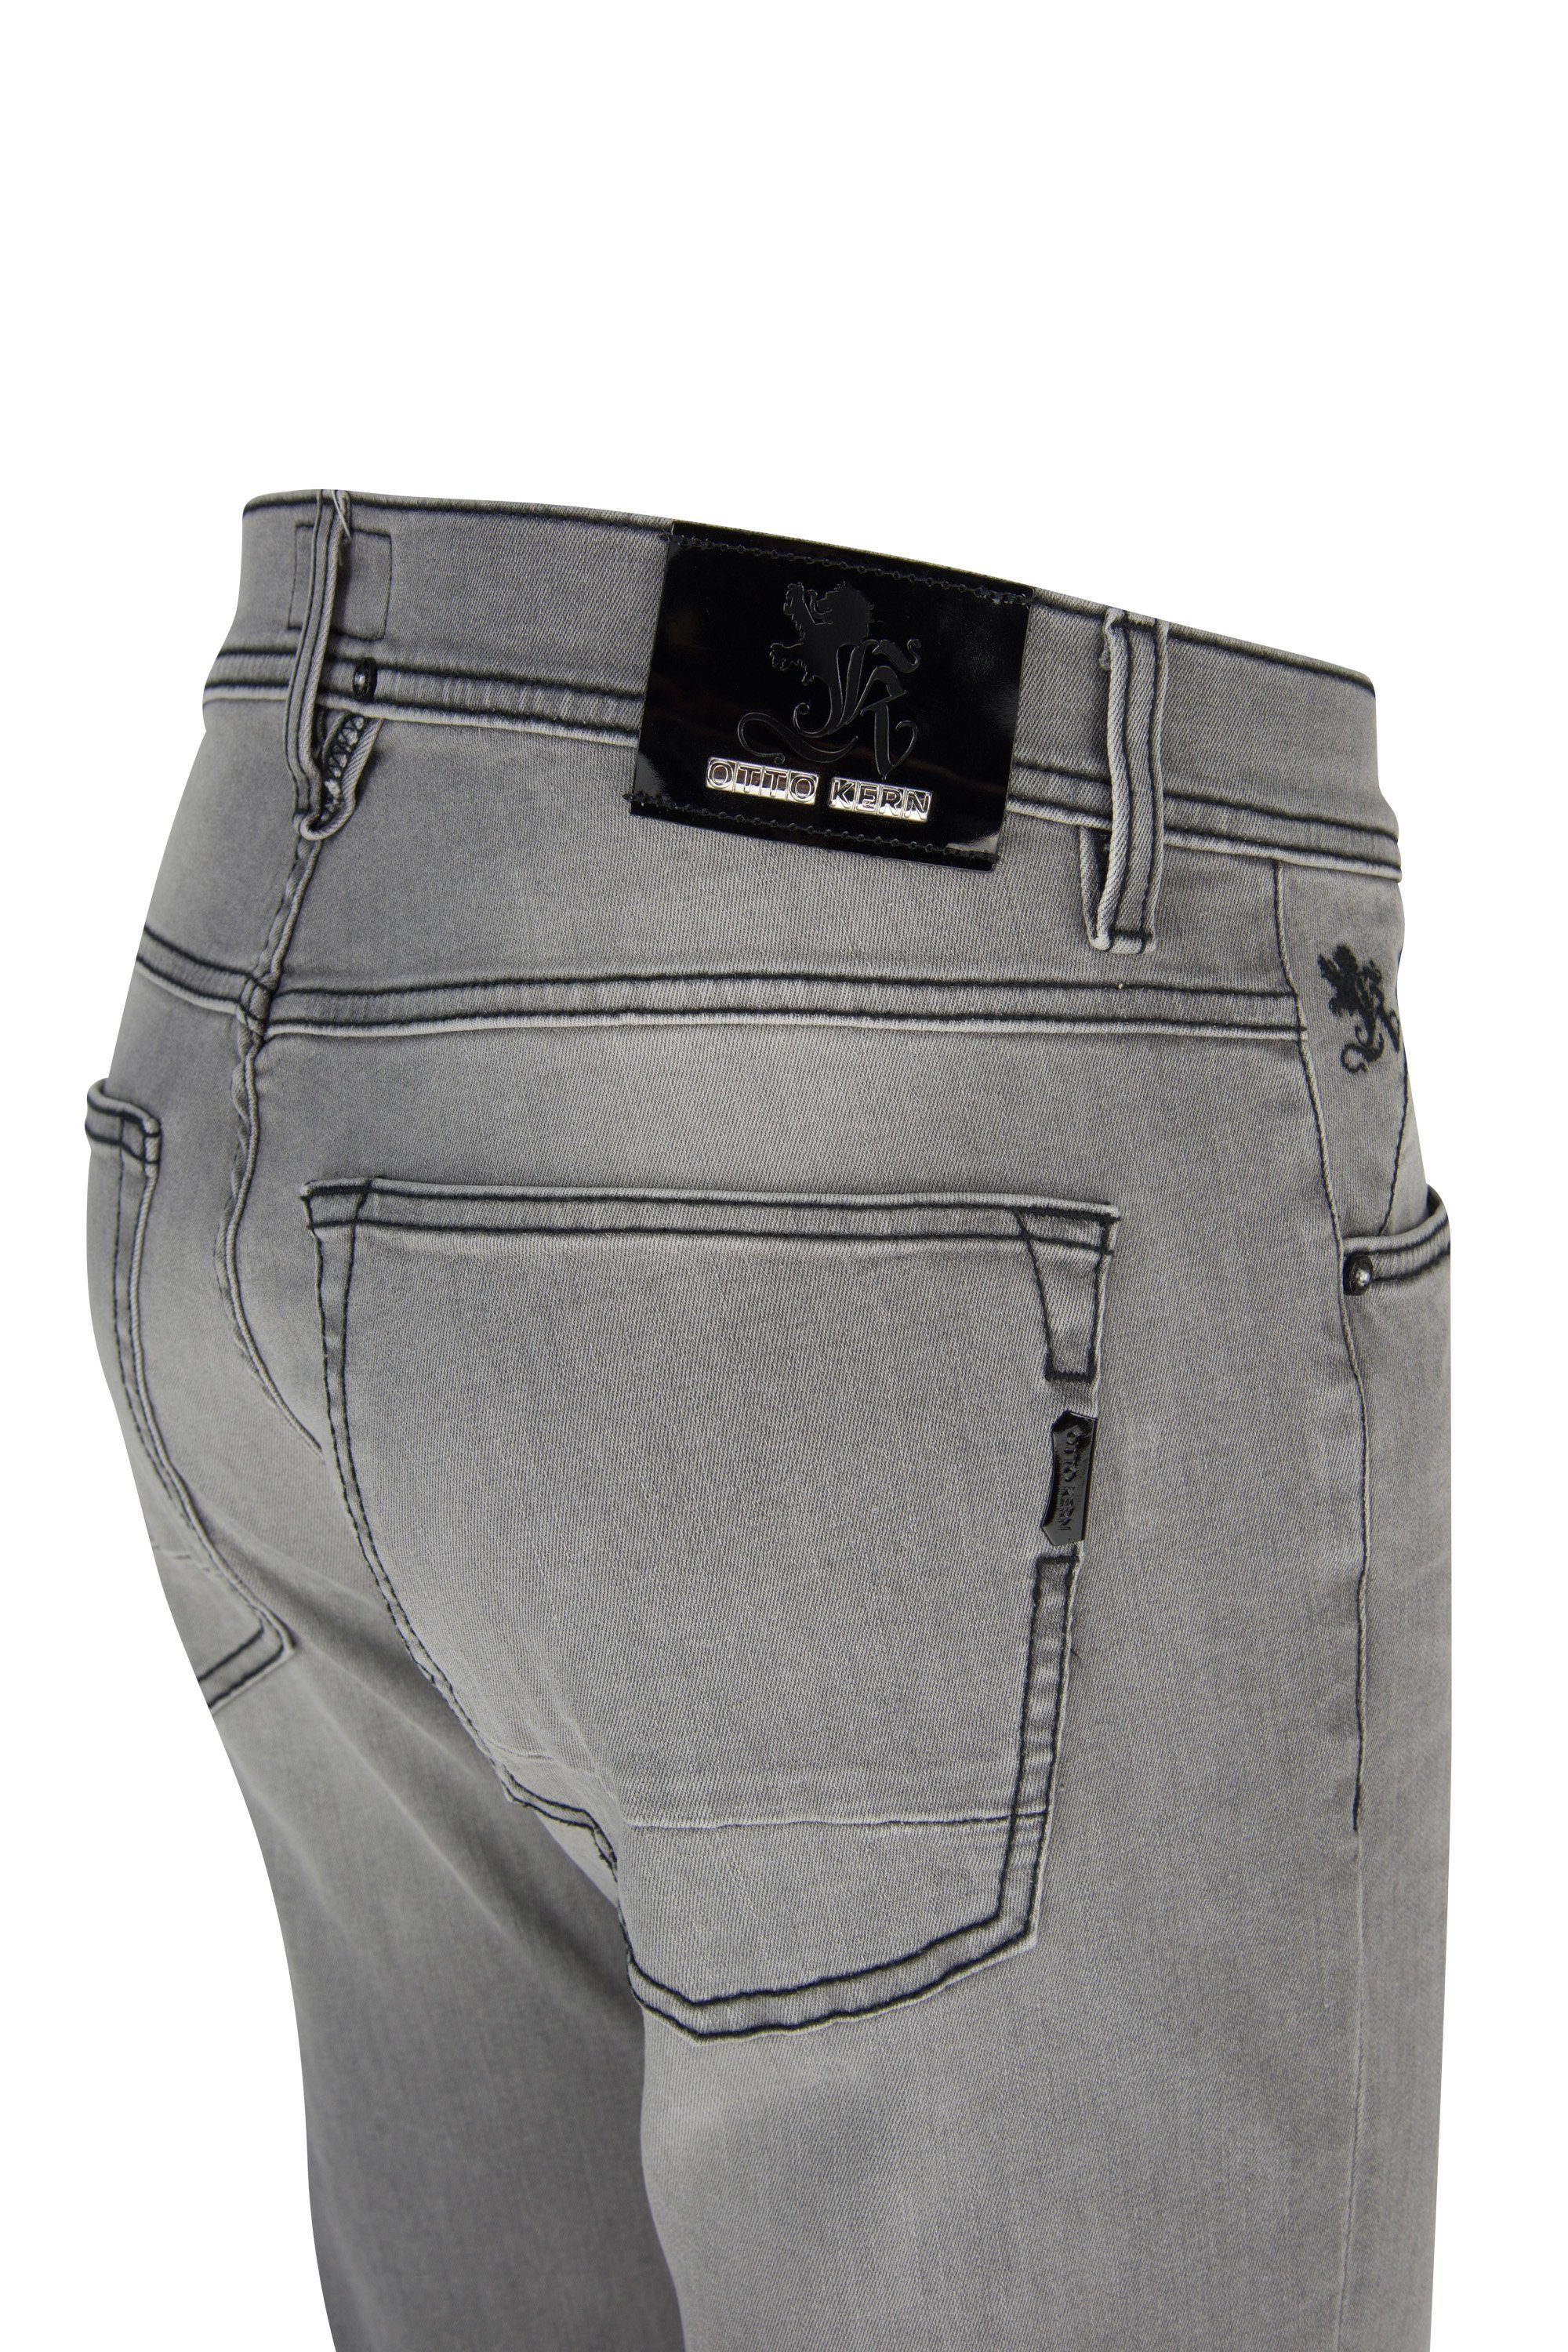 Herren Jeans Otto Kern 5-Pocket-Jeans OTTO KERN RAY light grey stonewash 67021 6835.9851